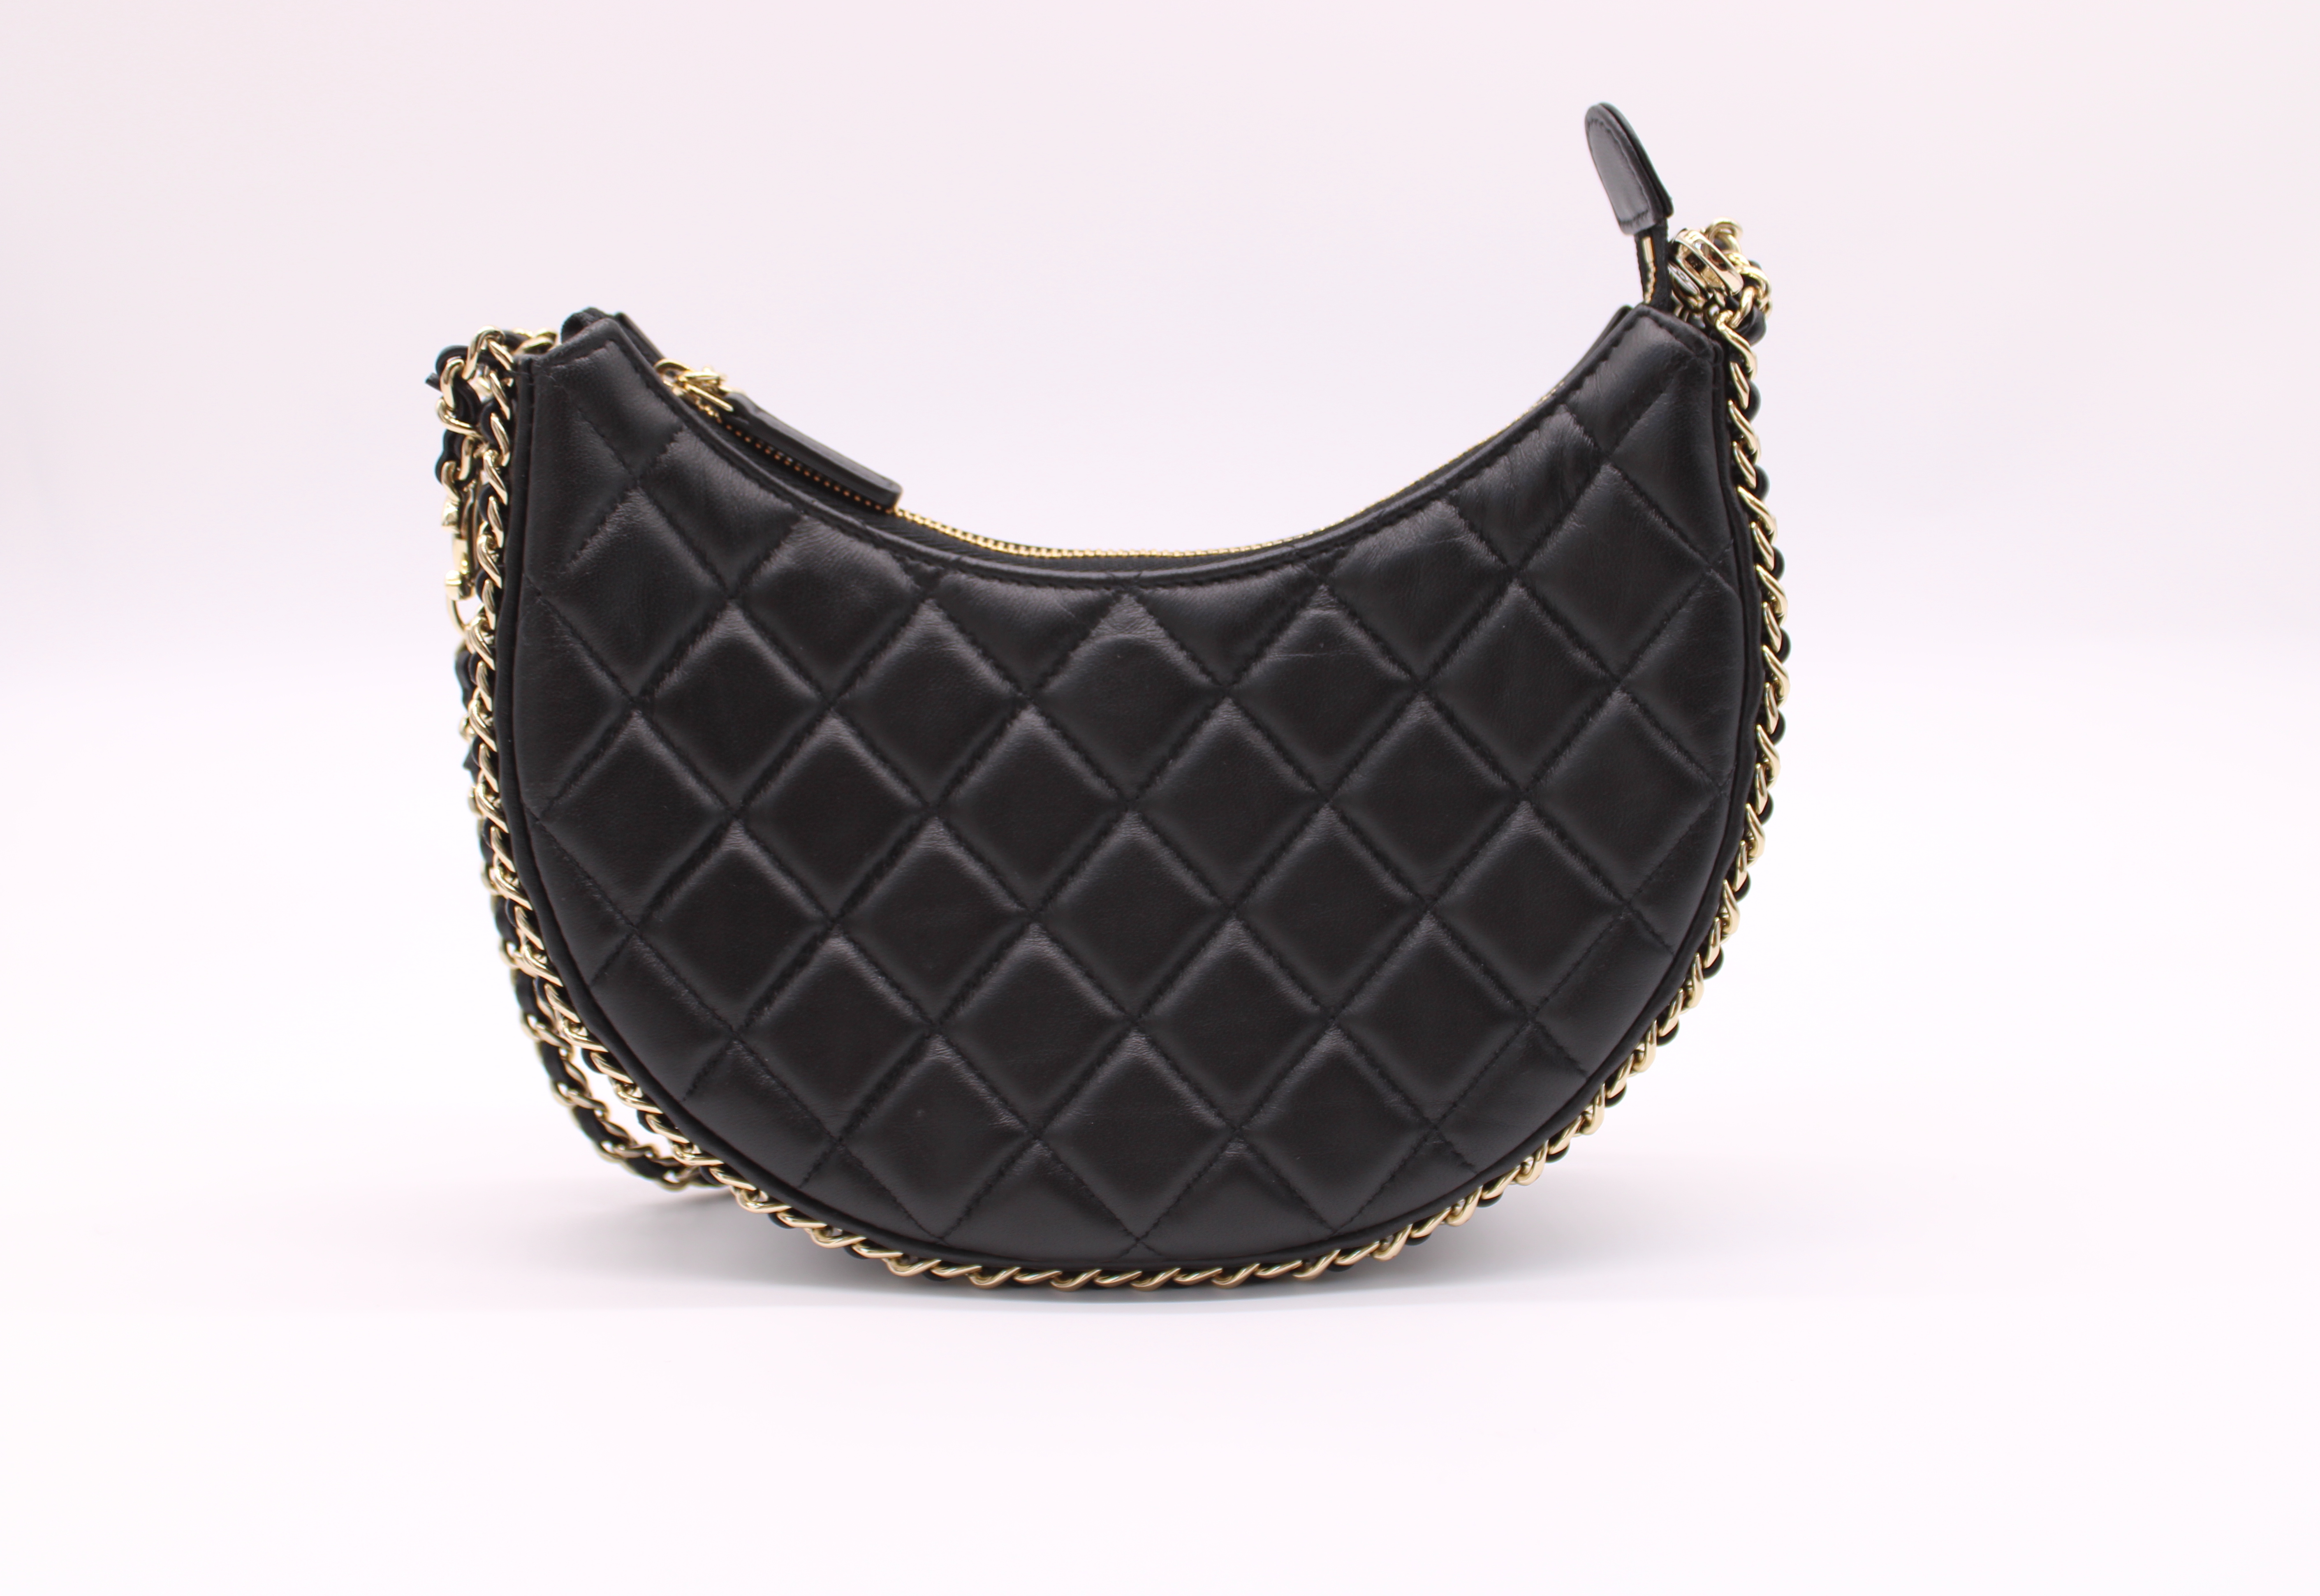 Chanel Small Hobo Bag, Pink Lambskin Leather, Gold Hardware, New in Box  MA001 - Julia Rose Boston